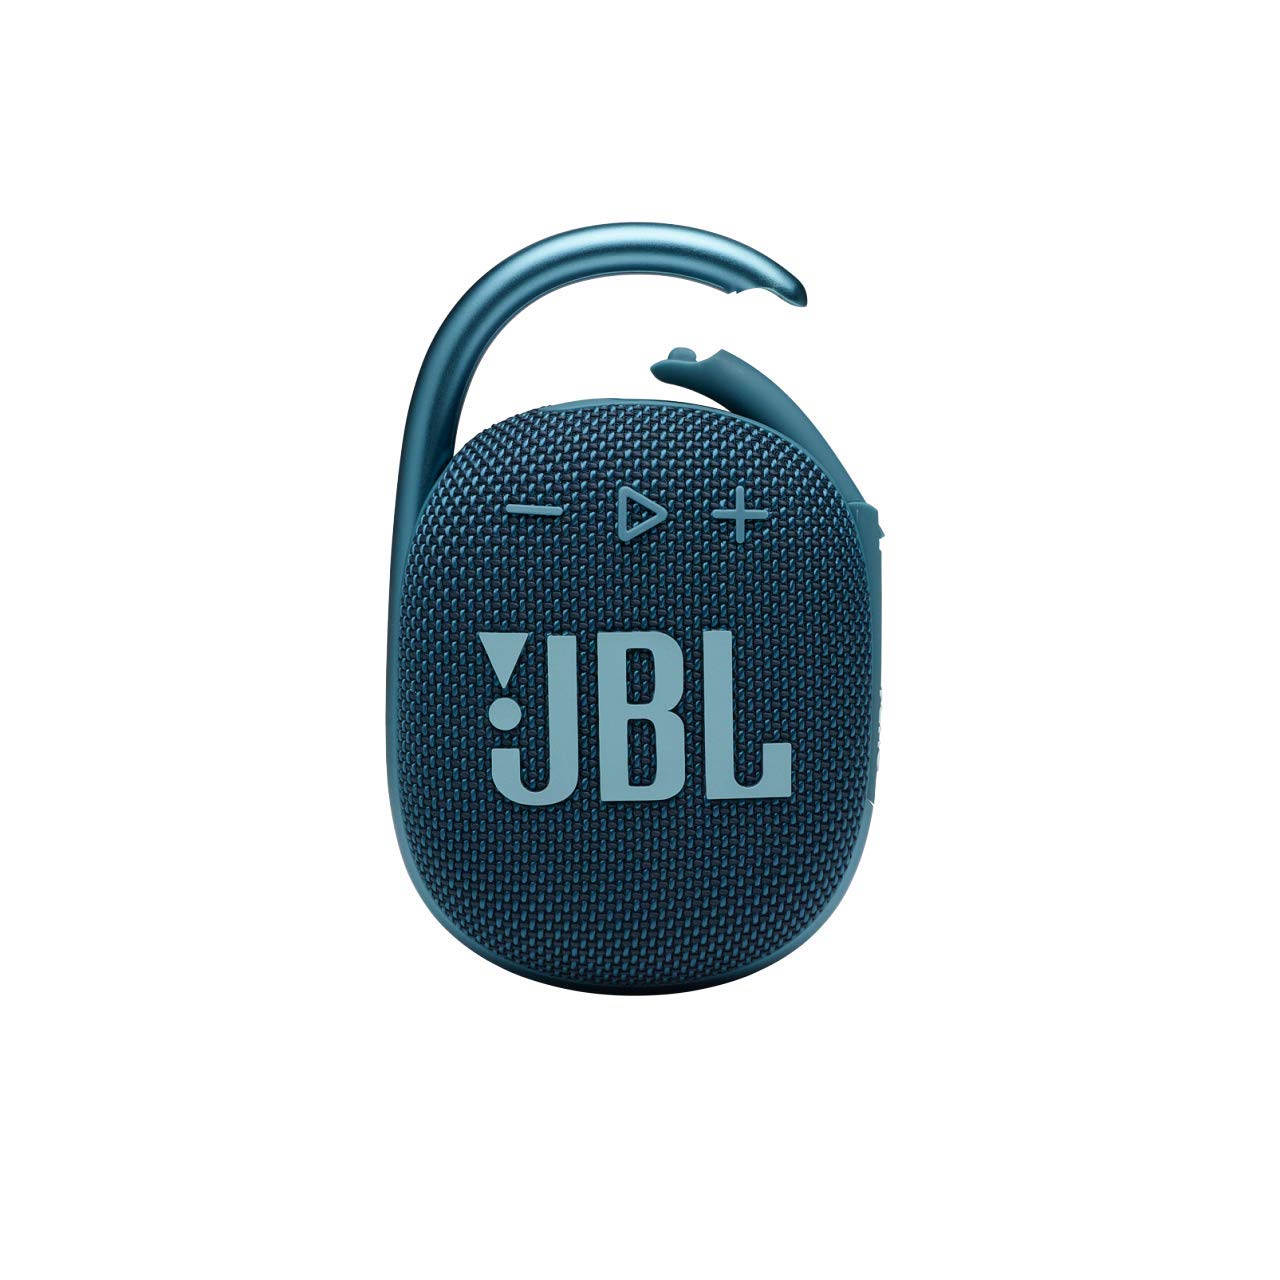 JBL Clip 4 Portable Bluetooth Speaker, JBL Pro Sound, Punchy Bass, Ultra-Portable Design, Integrated Carabiner, Clip Everywhere, IP67 Waterproof + Dustproof, 10H Battery - Blue, JBLCLIP4BLU